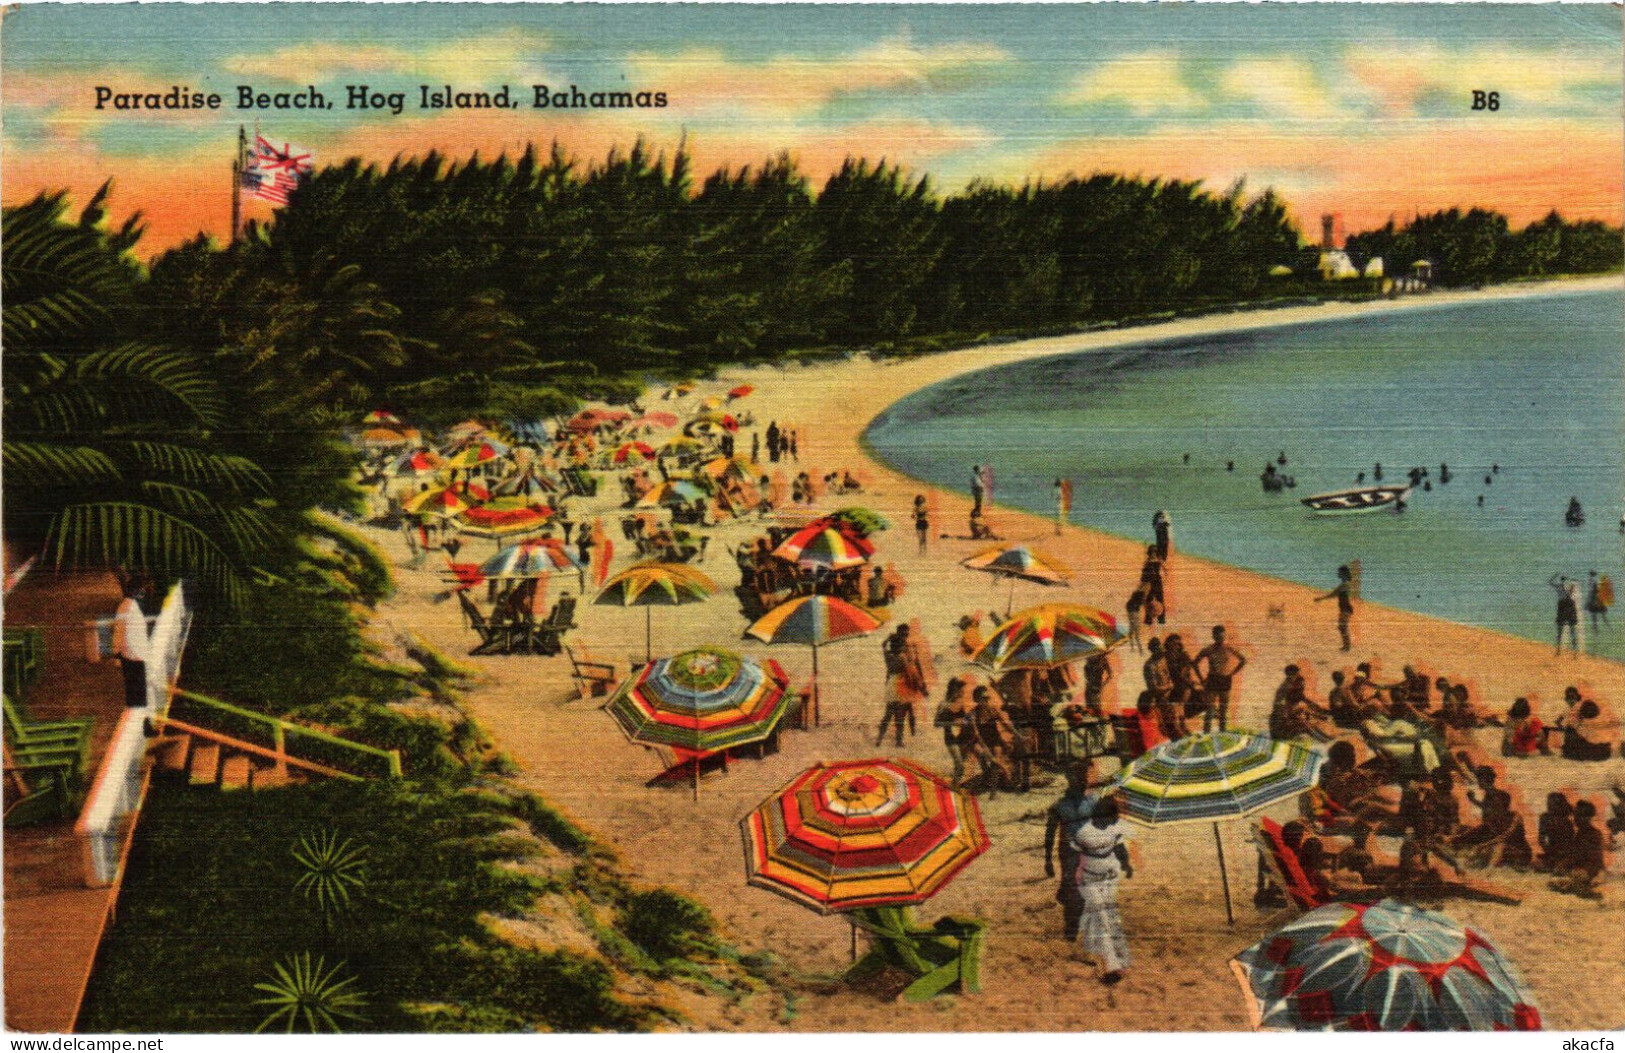 PC BAHAMAS CARIBBEAN HOG ISLAND PARADISE BEACH Vintage Postcard (b52213) - Bahamas